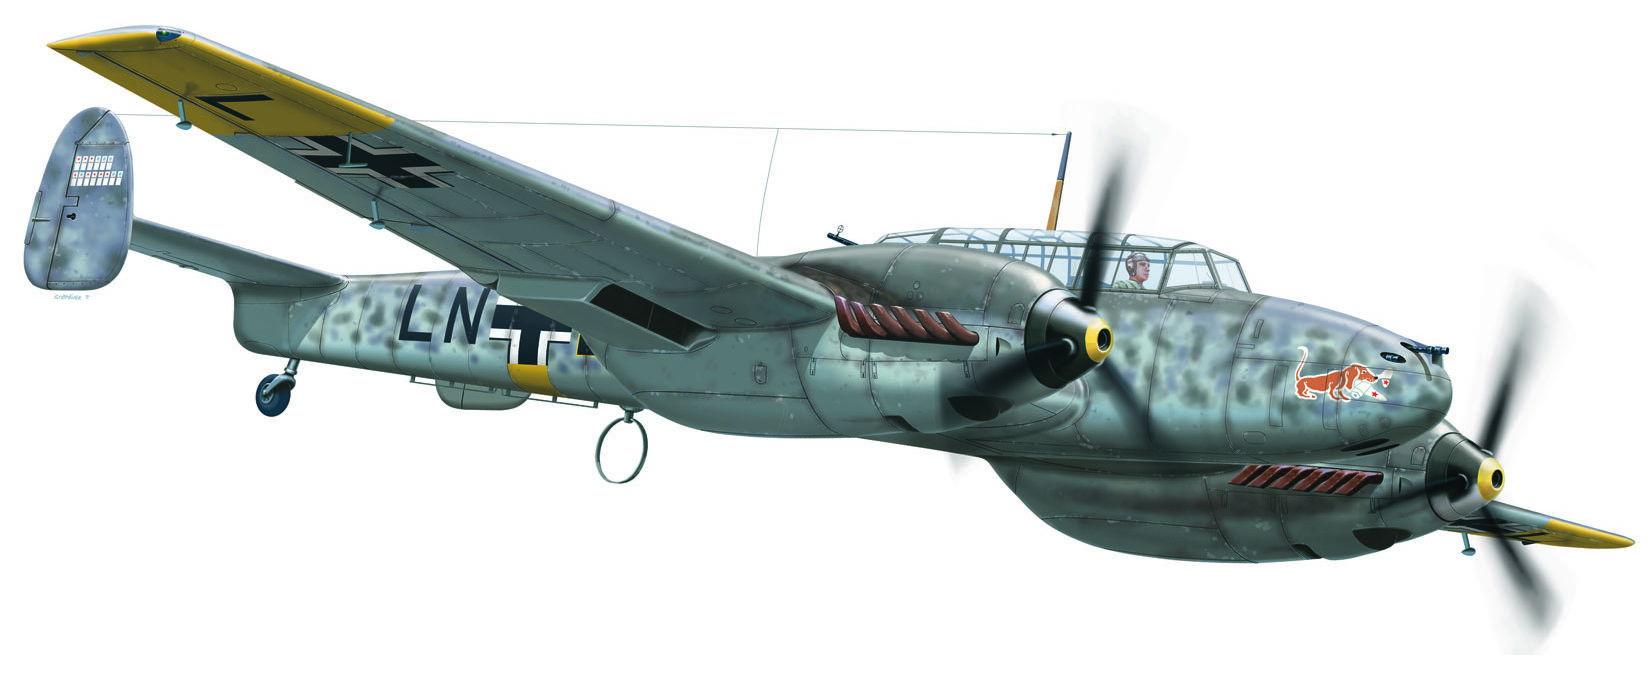 Štěpánek Petr. Истребитель Messerschmitt Bf-110E.